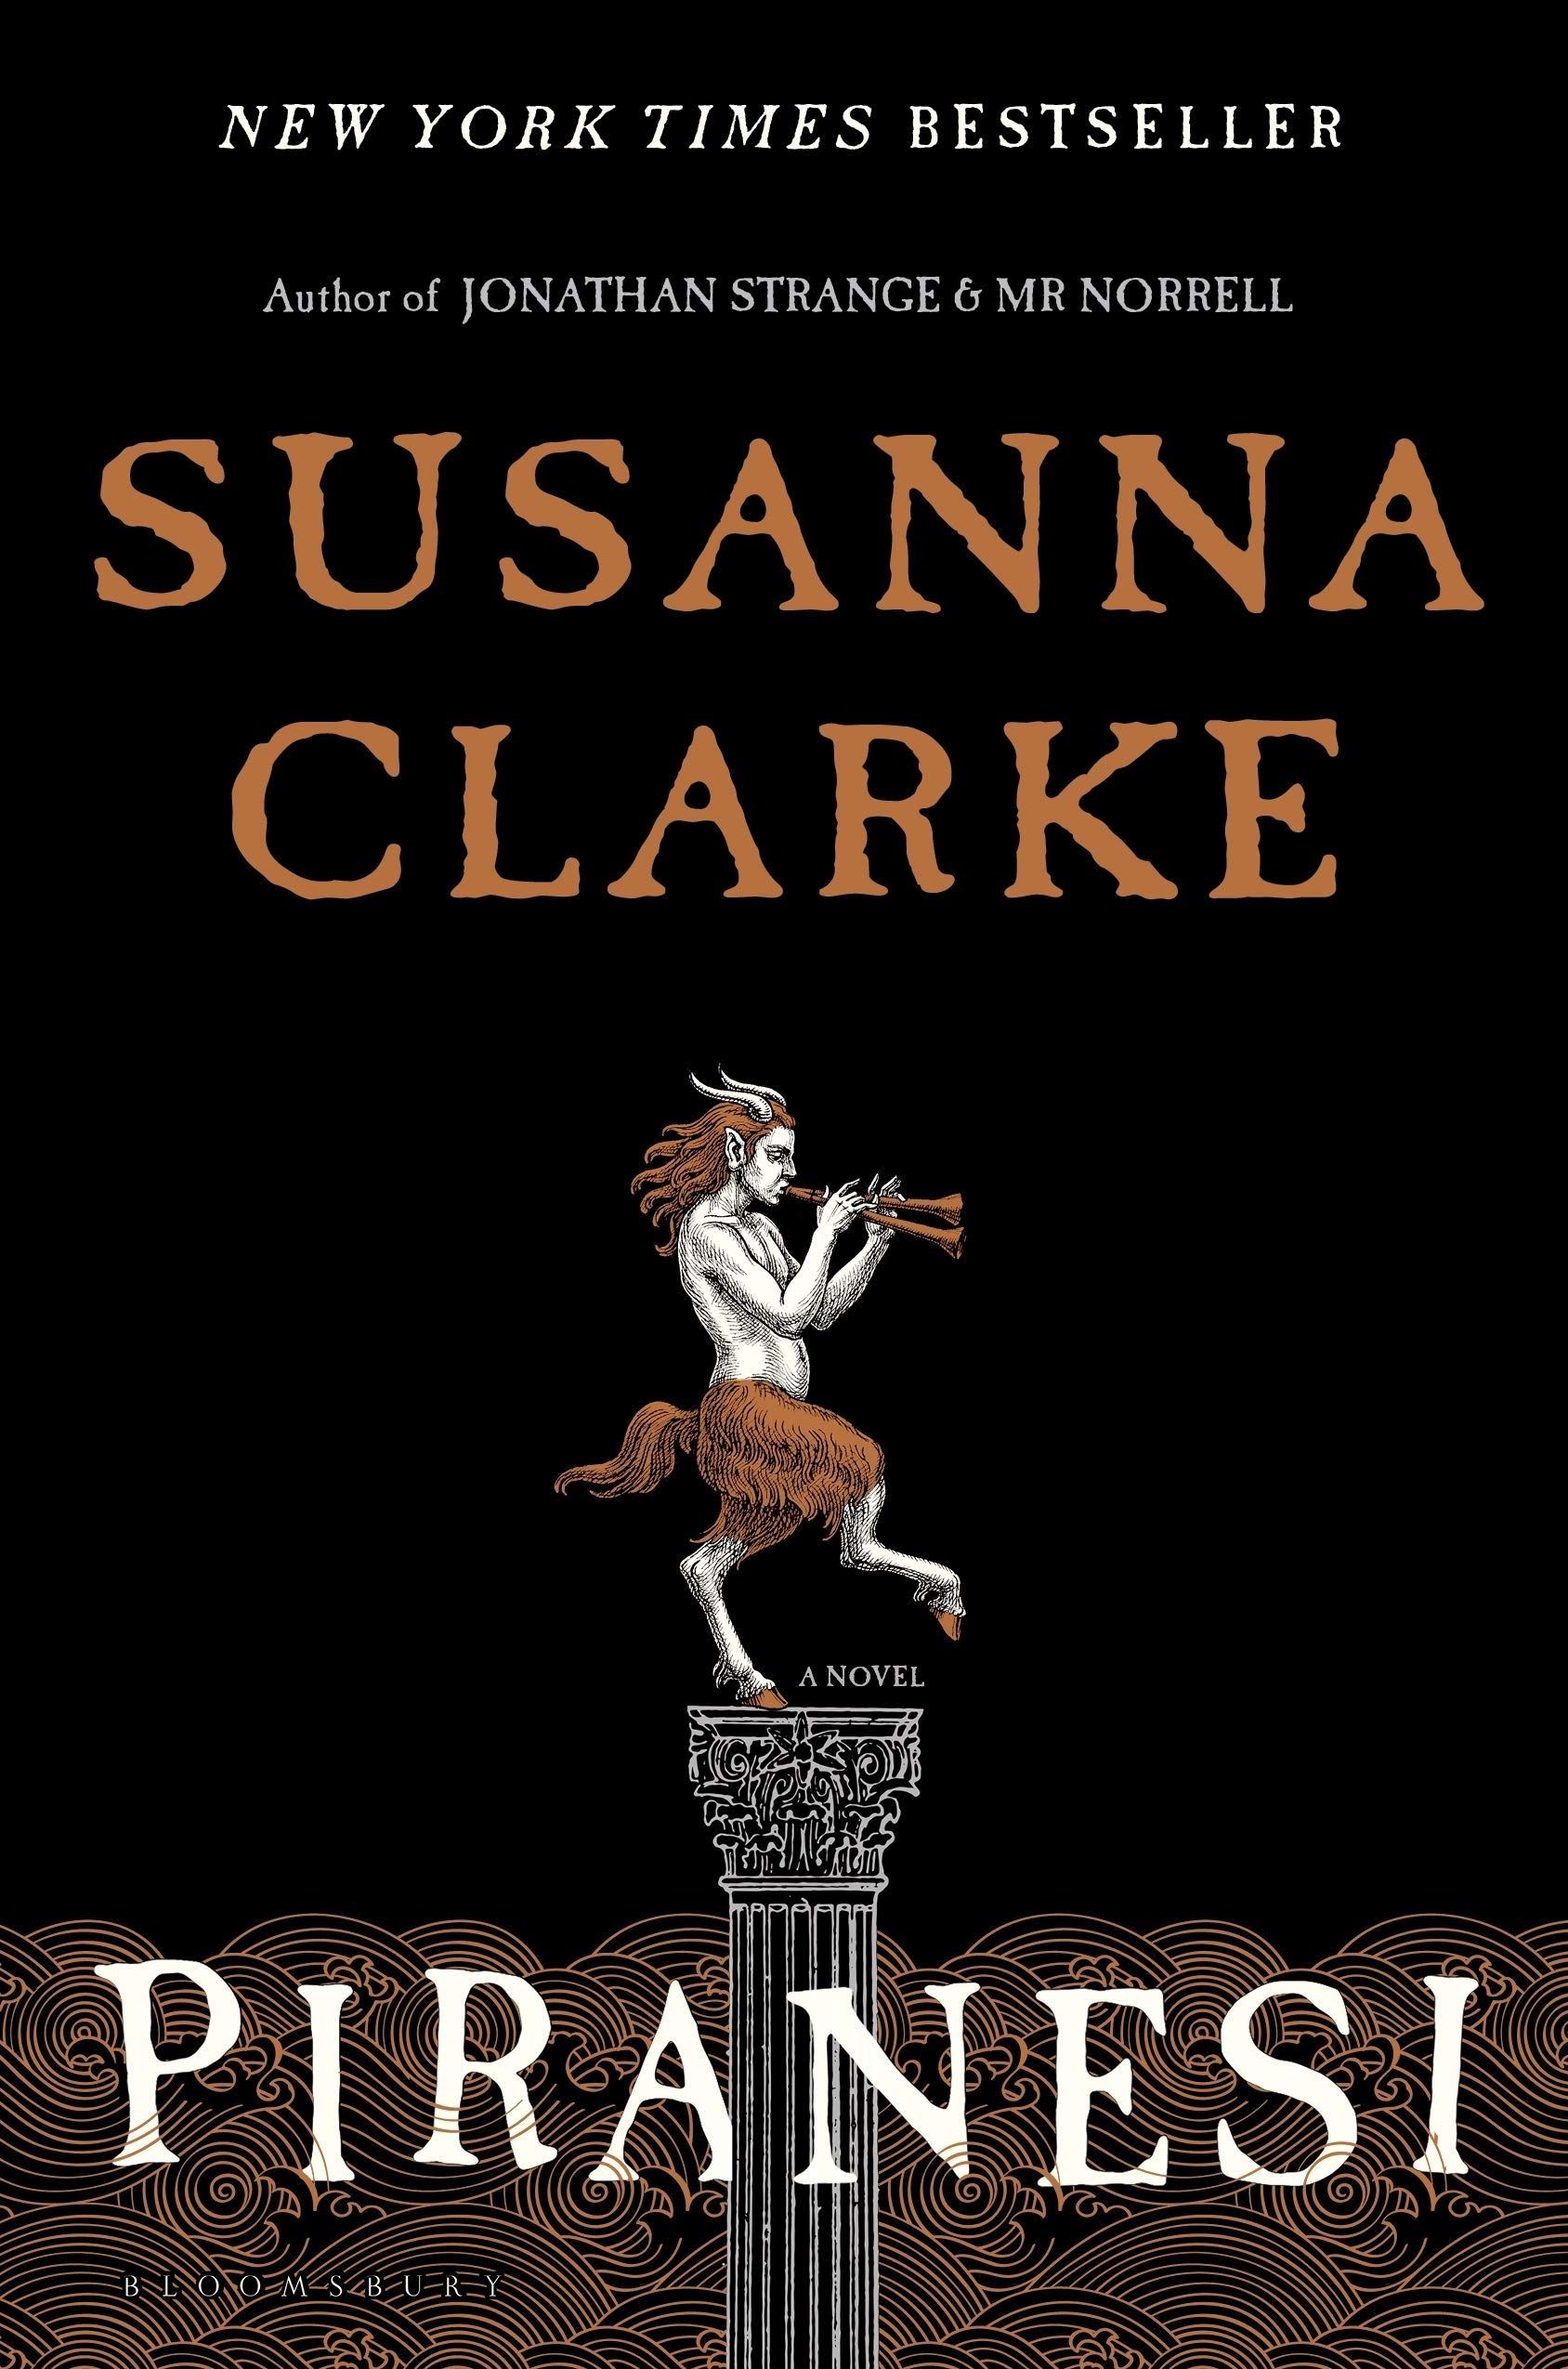 The Beauty of the House: On Susanna Clarke’s “Piranesi”